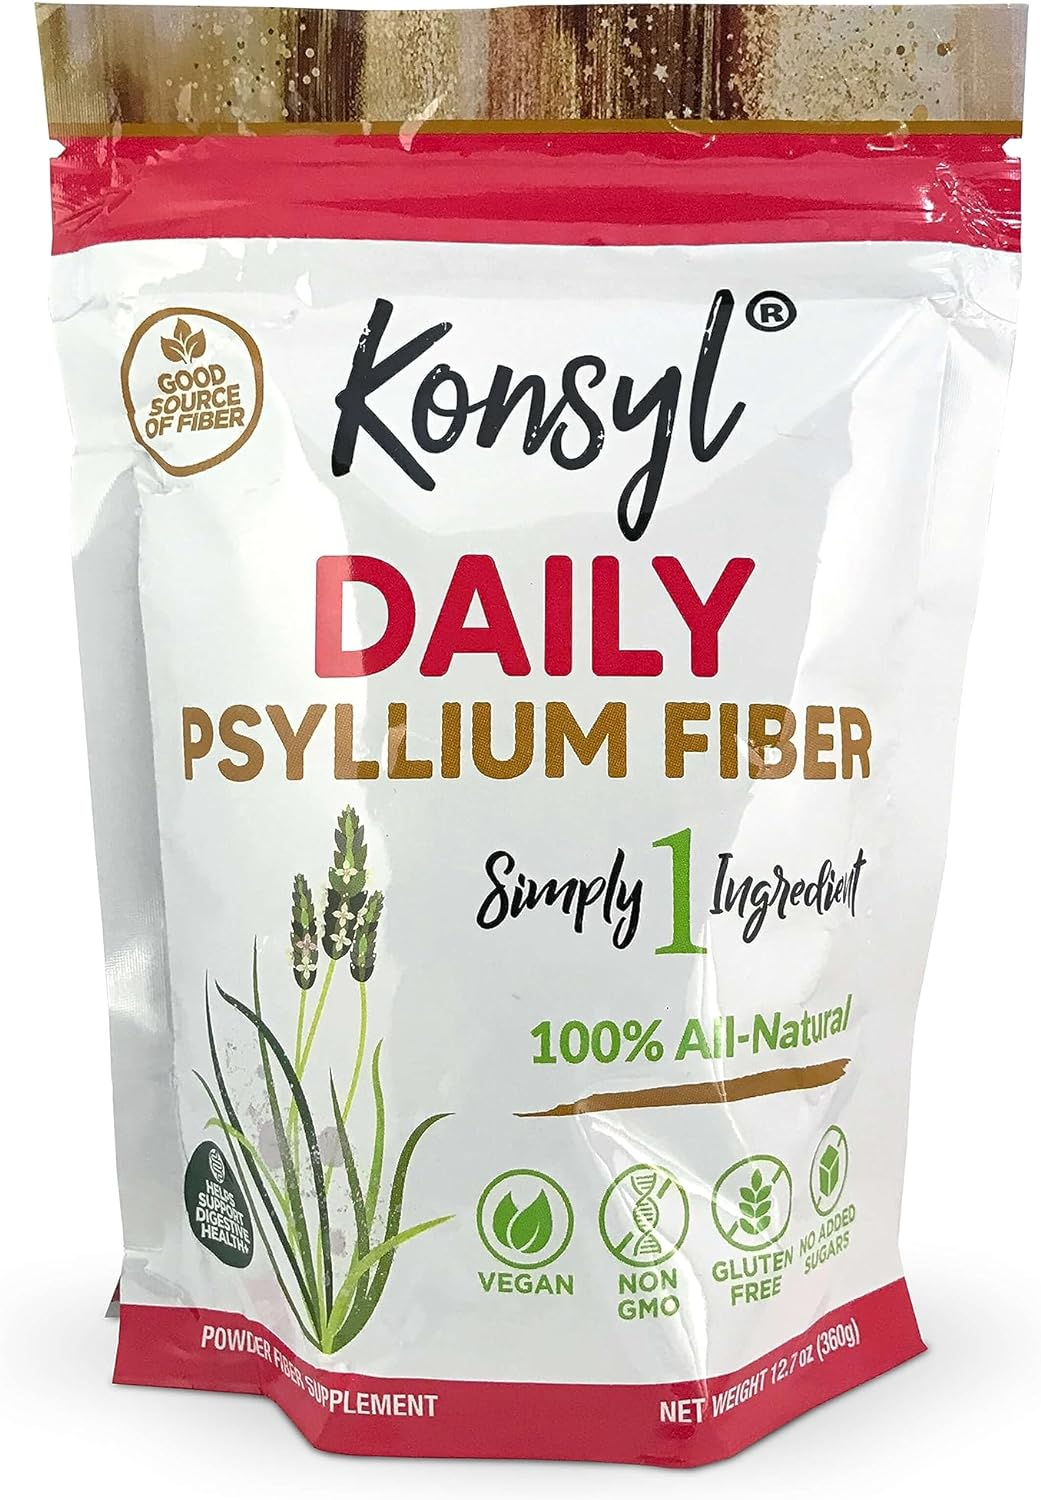 Konsyl Daily Psyllium Fiber 360g / 12.7oz - Non-GMO, Vegan, Keto-Friendly, Fiber Supplement Powder - Supports Digestive Health